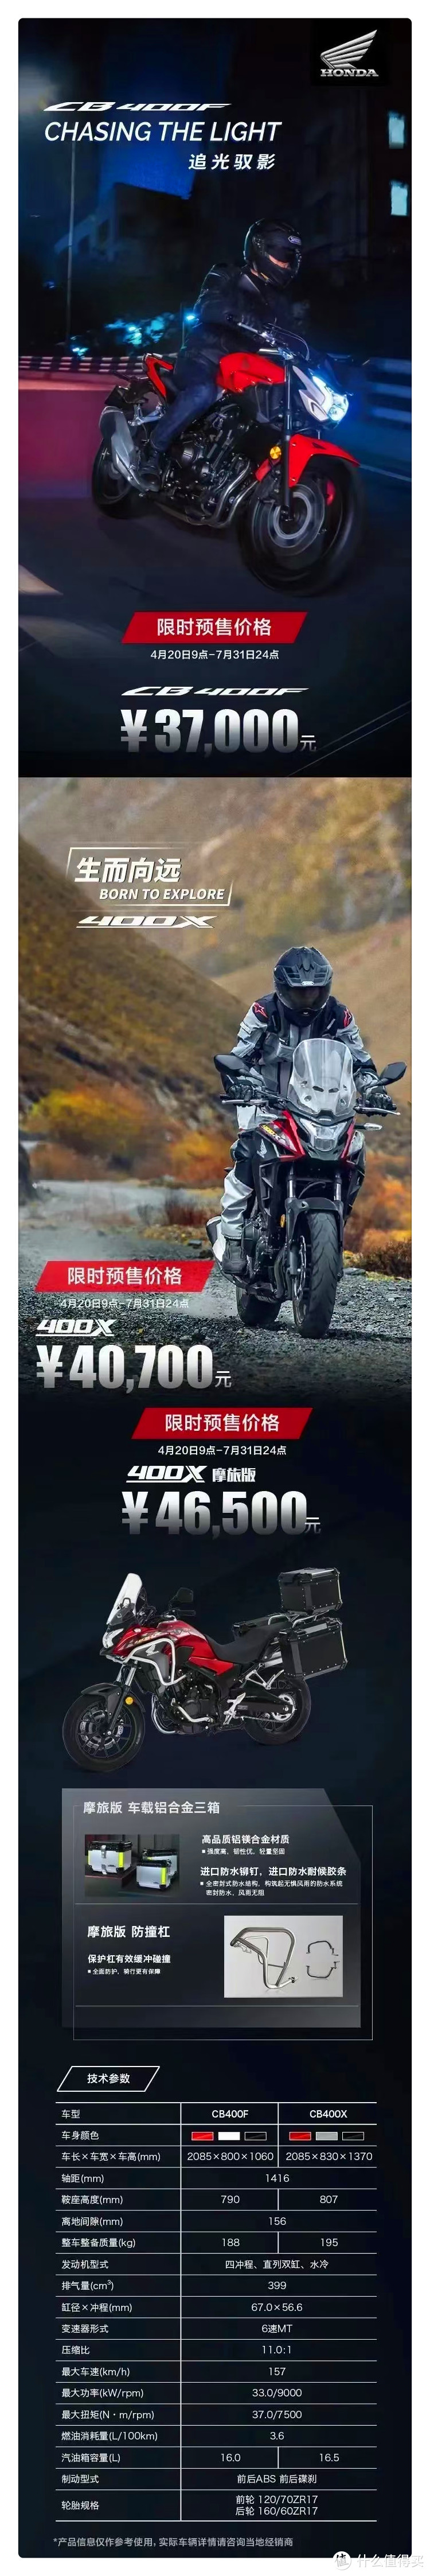 Honda Wing 本田小翅膀cb400f和cb400x以及其他竞品短评 摩托车整车 什么值得买